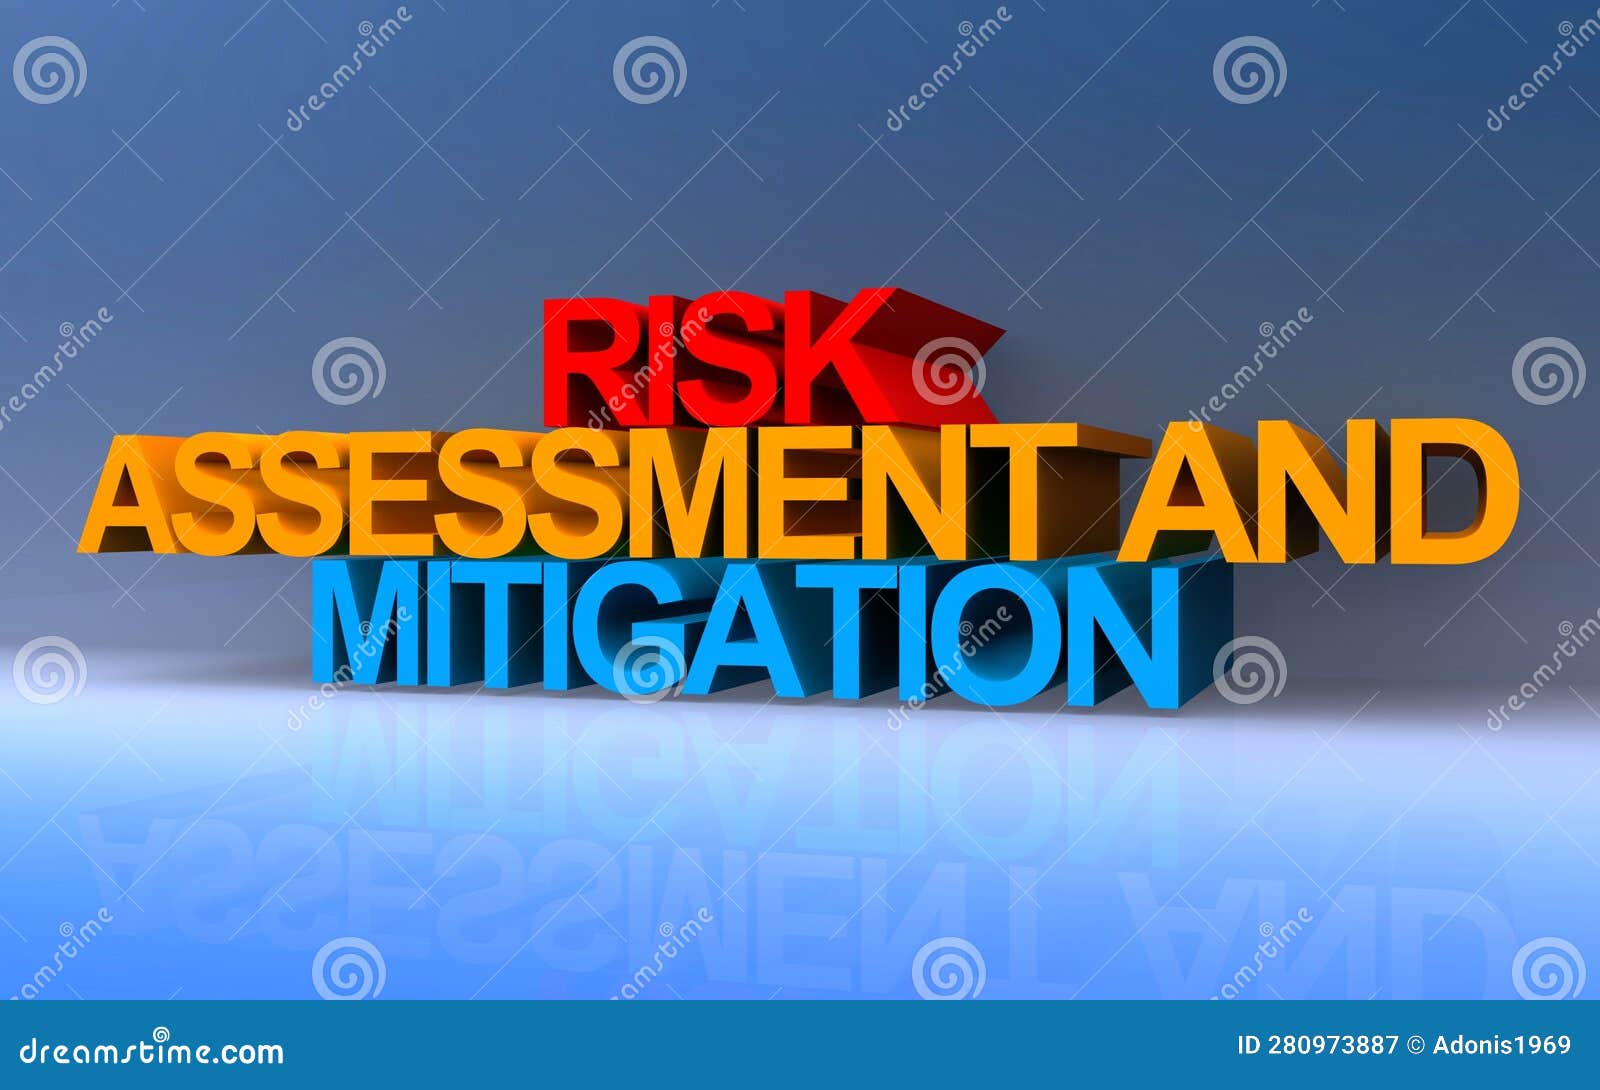 risk assessment and mitigation on blue